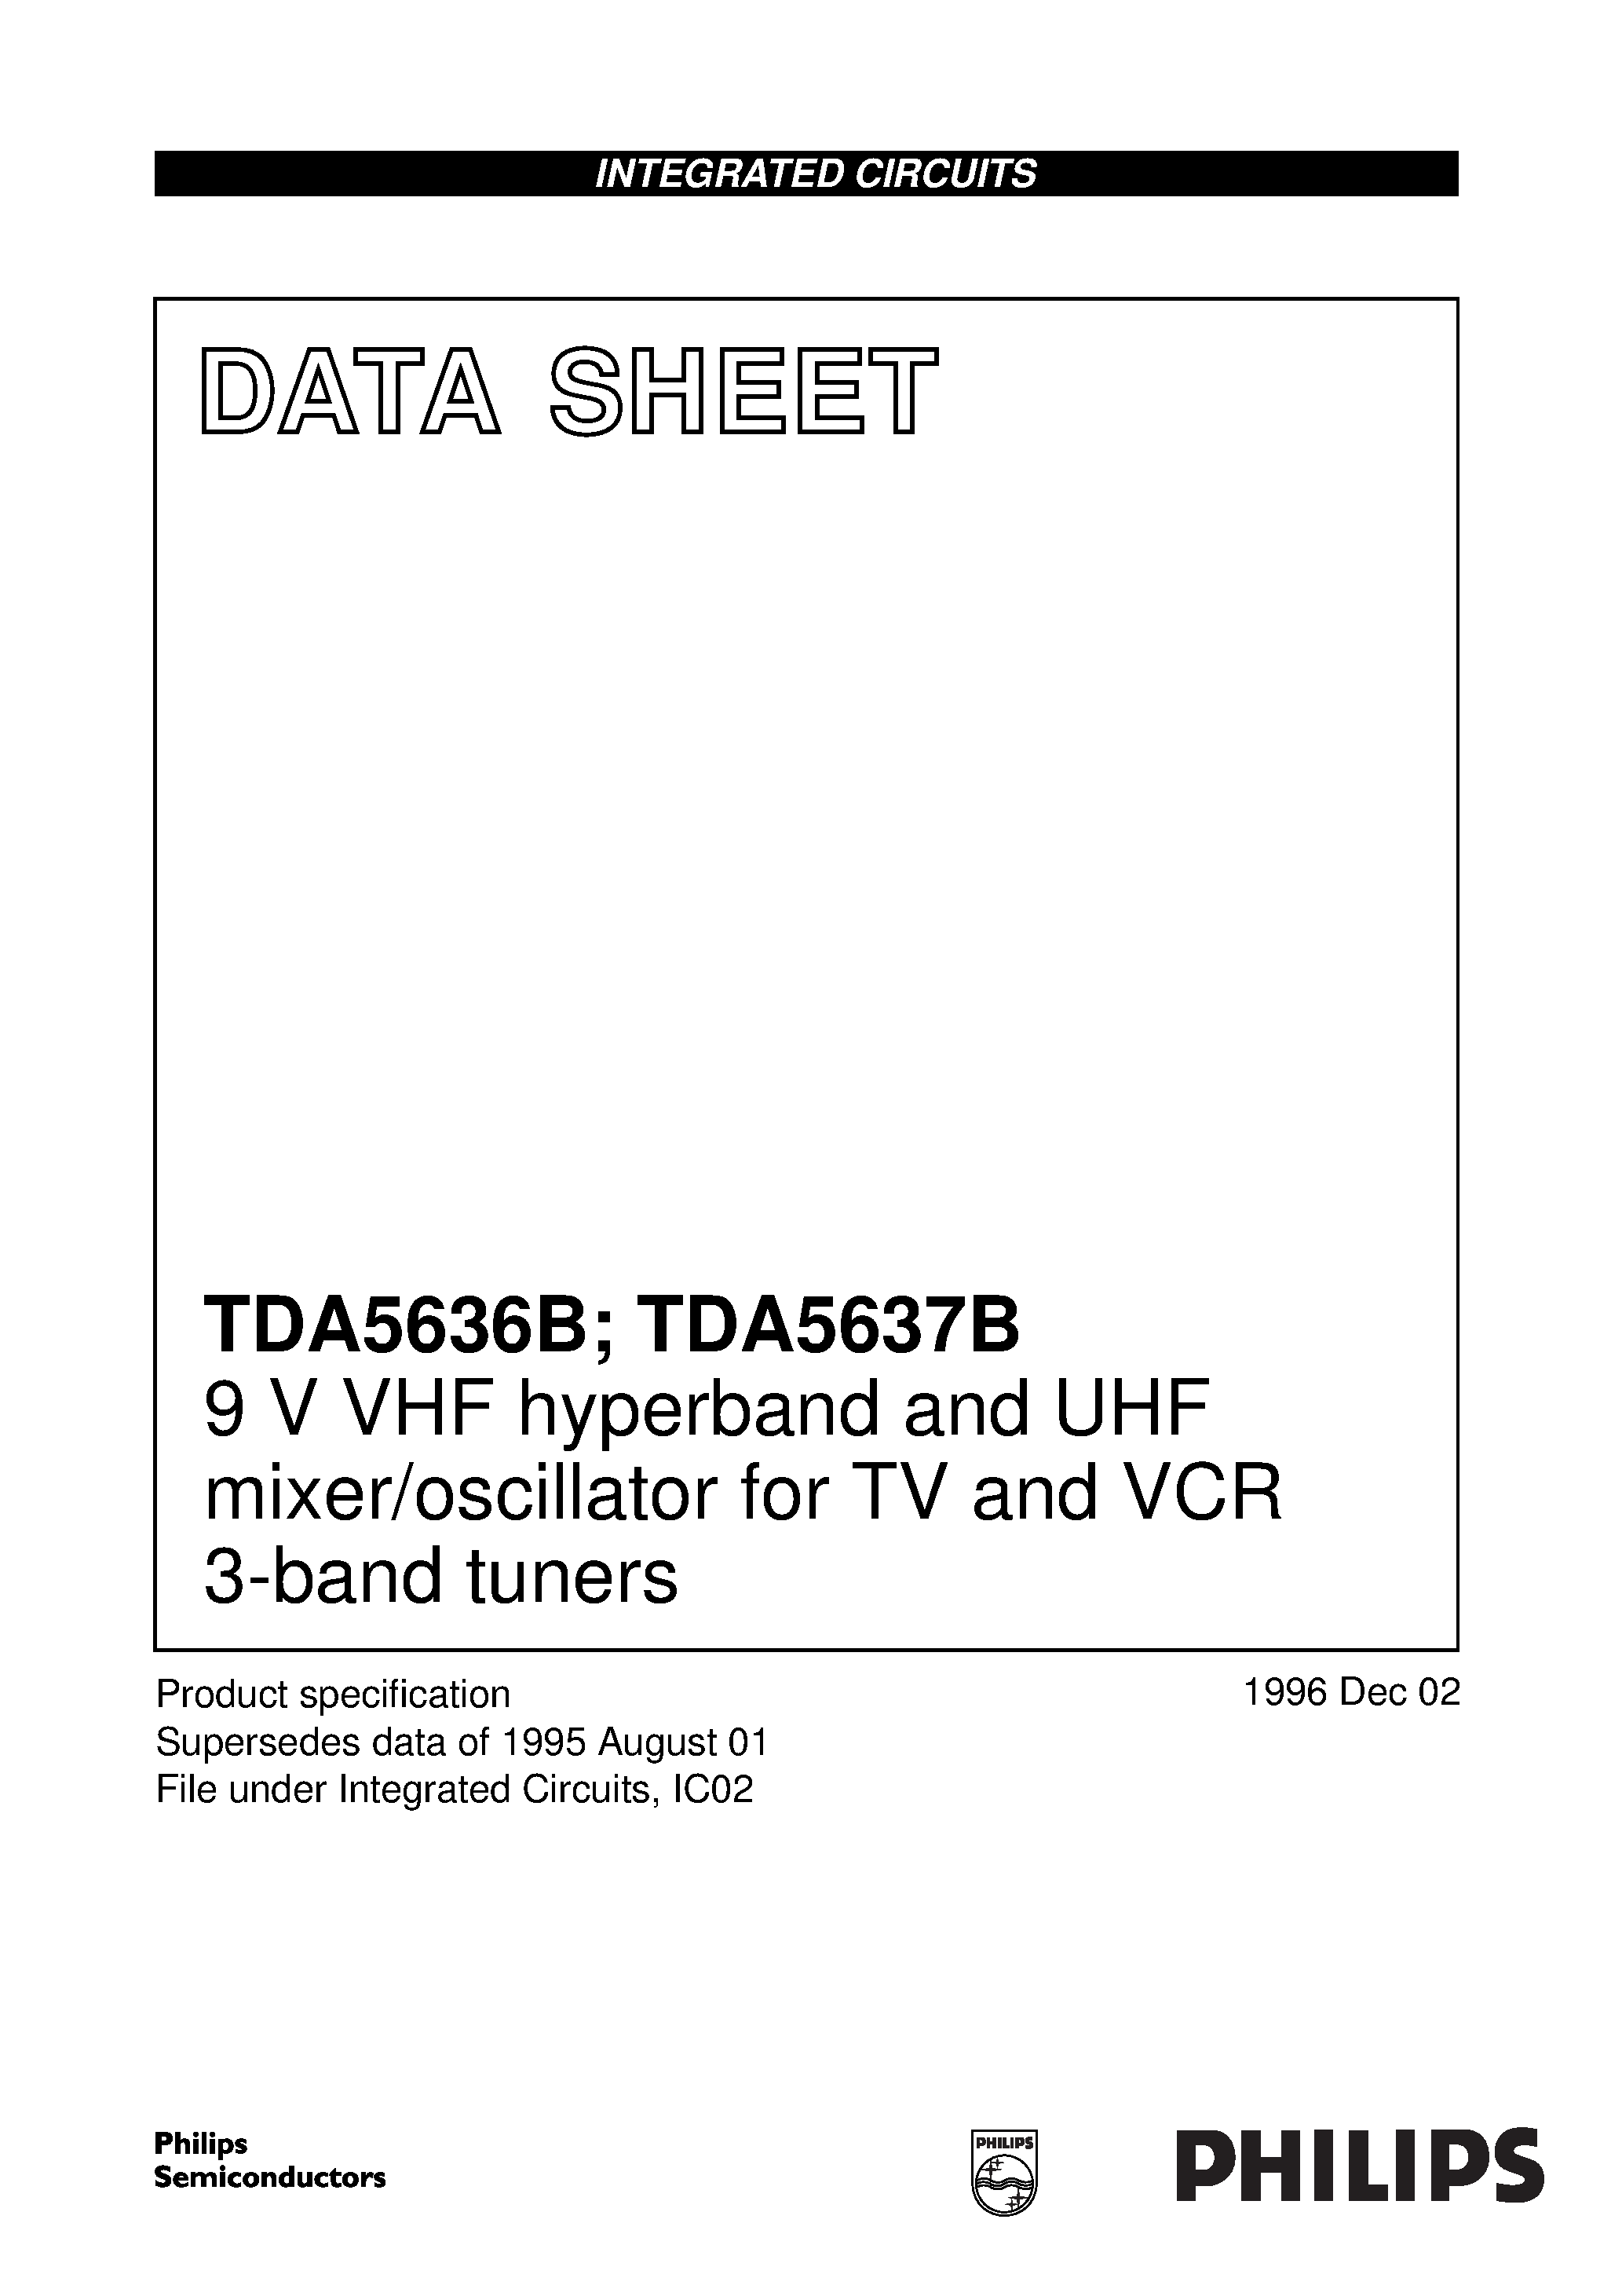 Datasheet TDA5636BM - 9 V VHF hyperband and UHF mixer/oscillator for TV and VCR 3-band tuners page 1